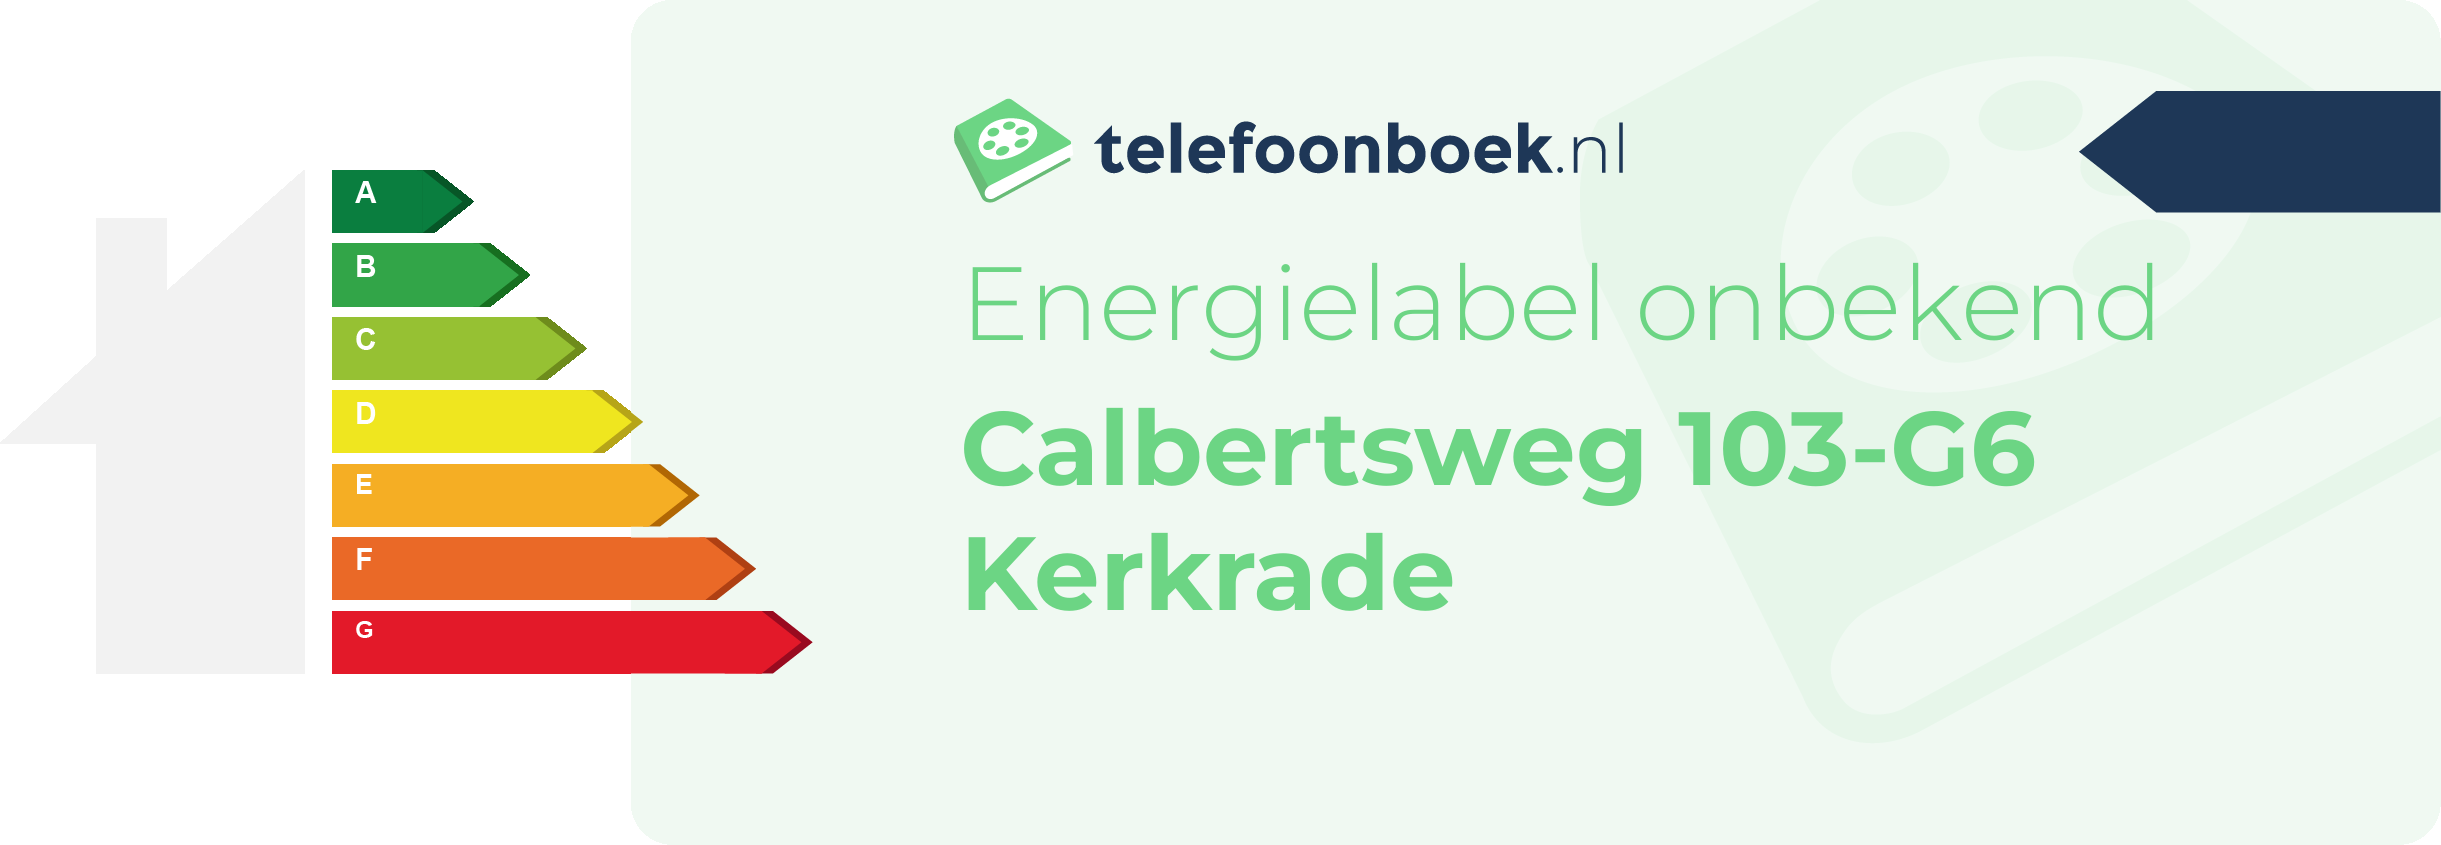 Energielabel Calbertsweg 103-G6 Kerkrade